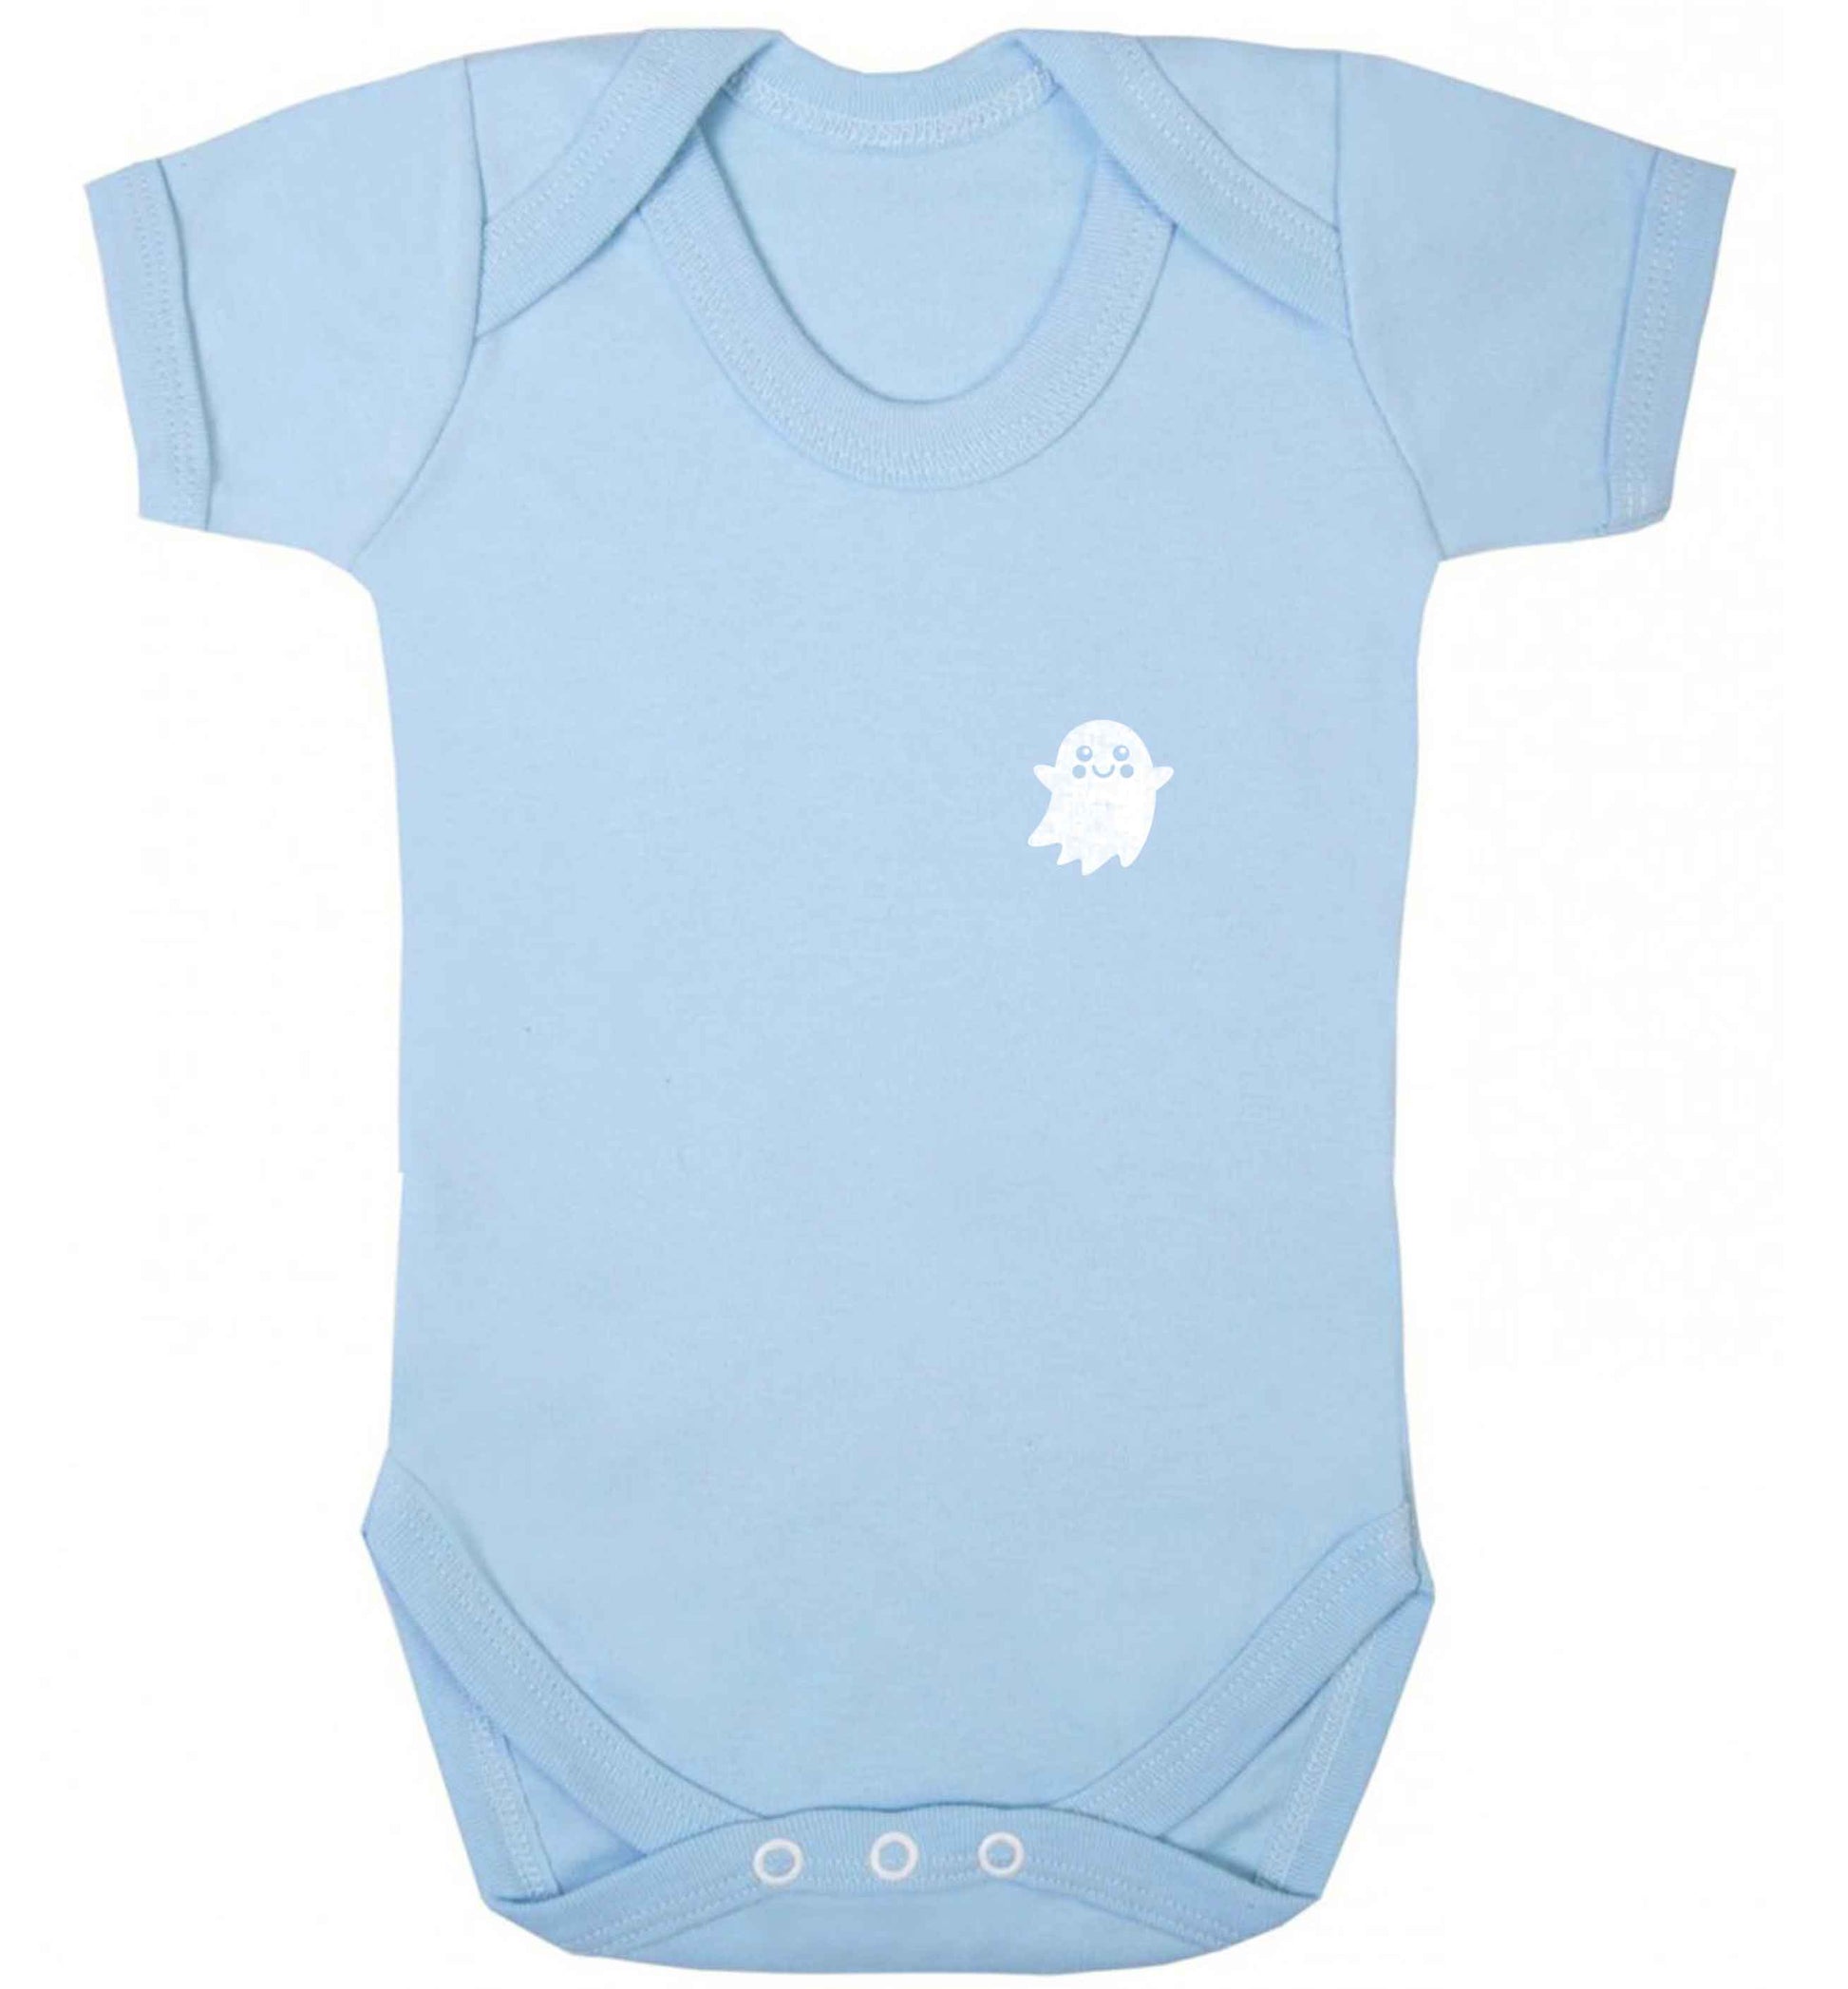 Pocket ghost baby vest pale blue 18-24 months